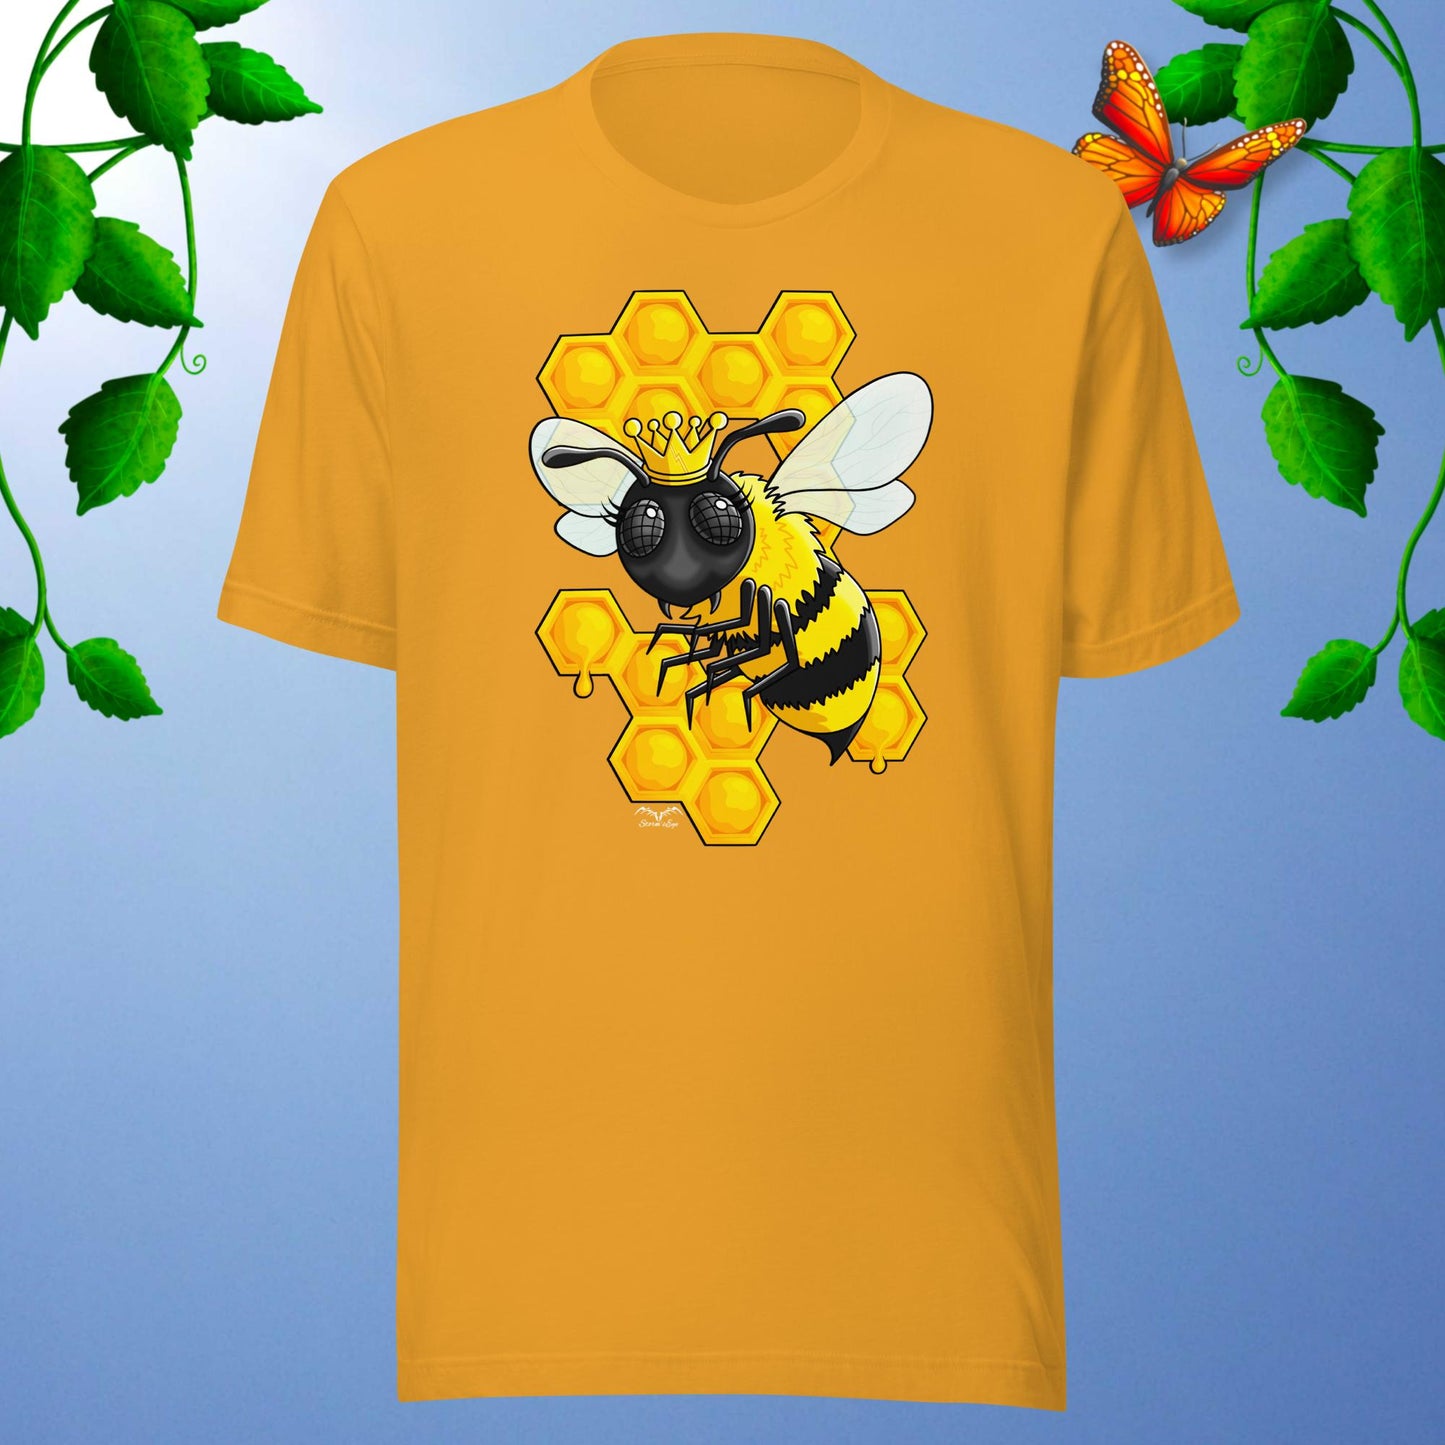 queen bee t-shirt yellow by stormseye design